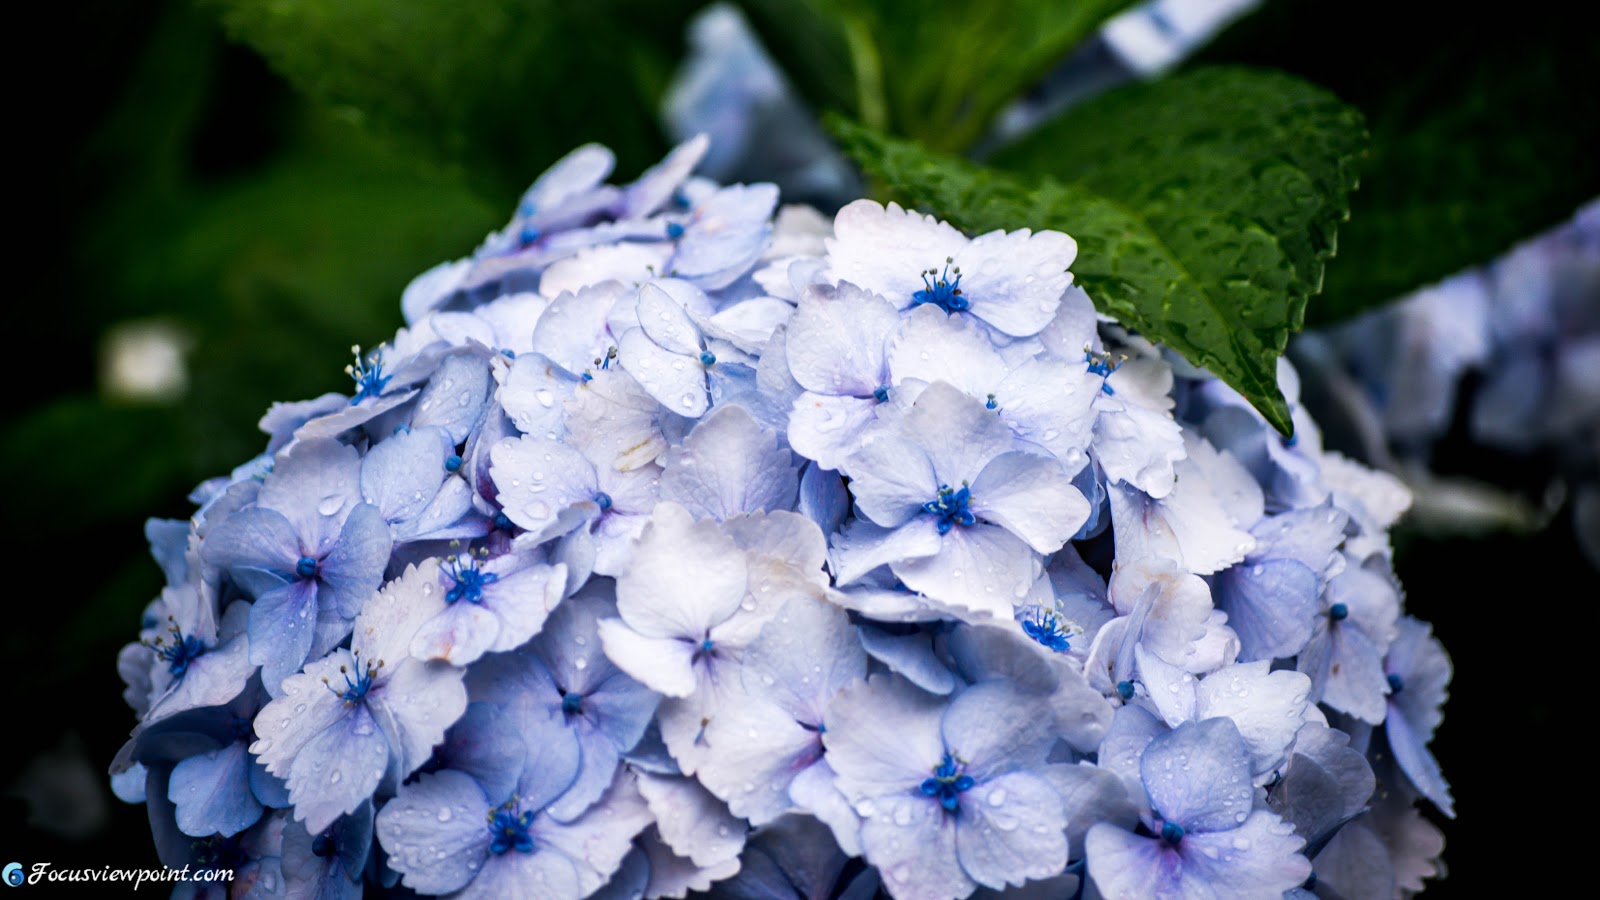 The Japanese Rainy Season S Flower Blue Hydrangea Ajisai あじさい Focus Viewpoint